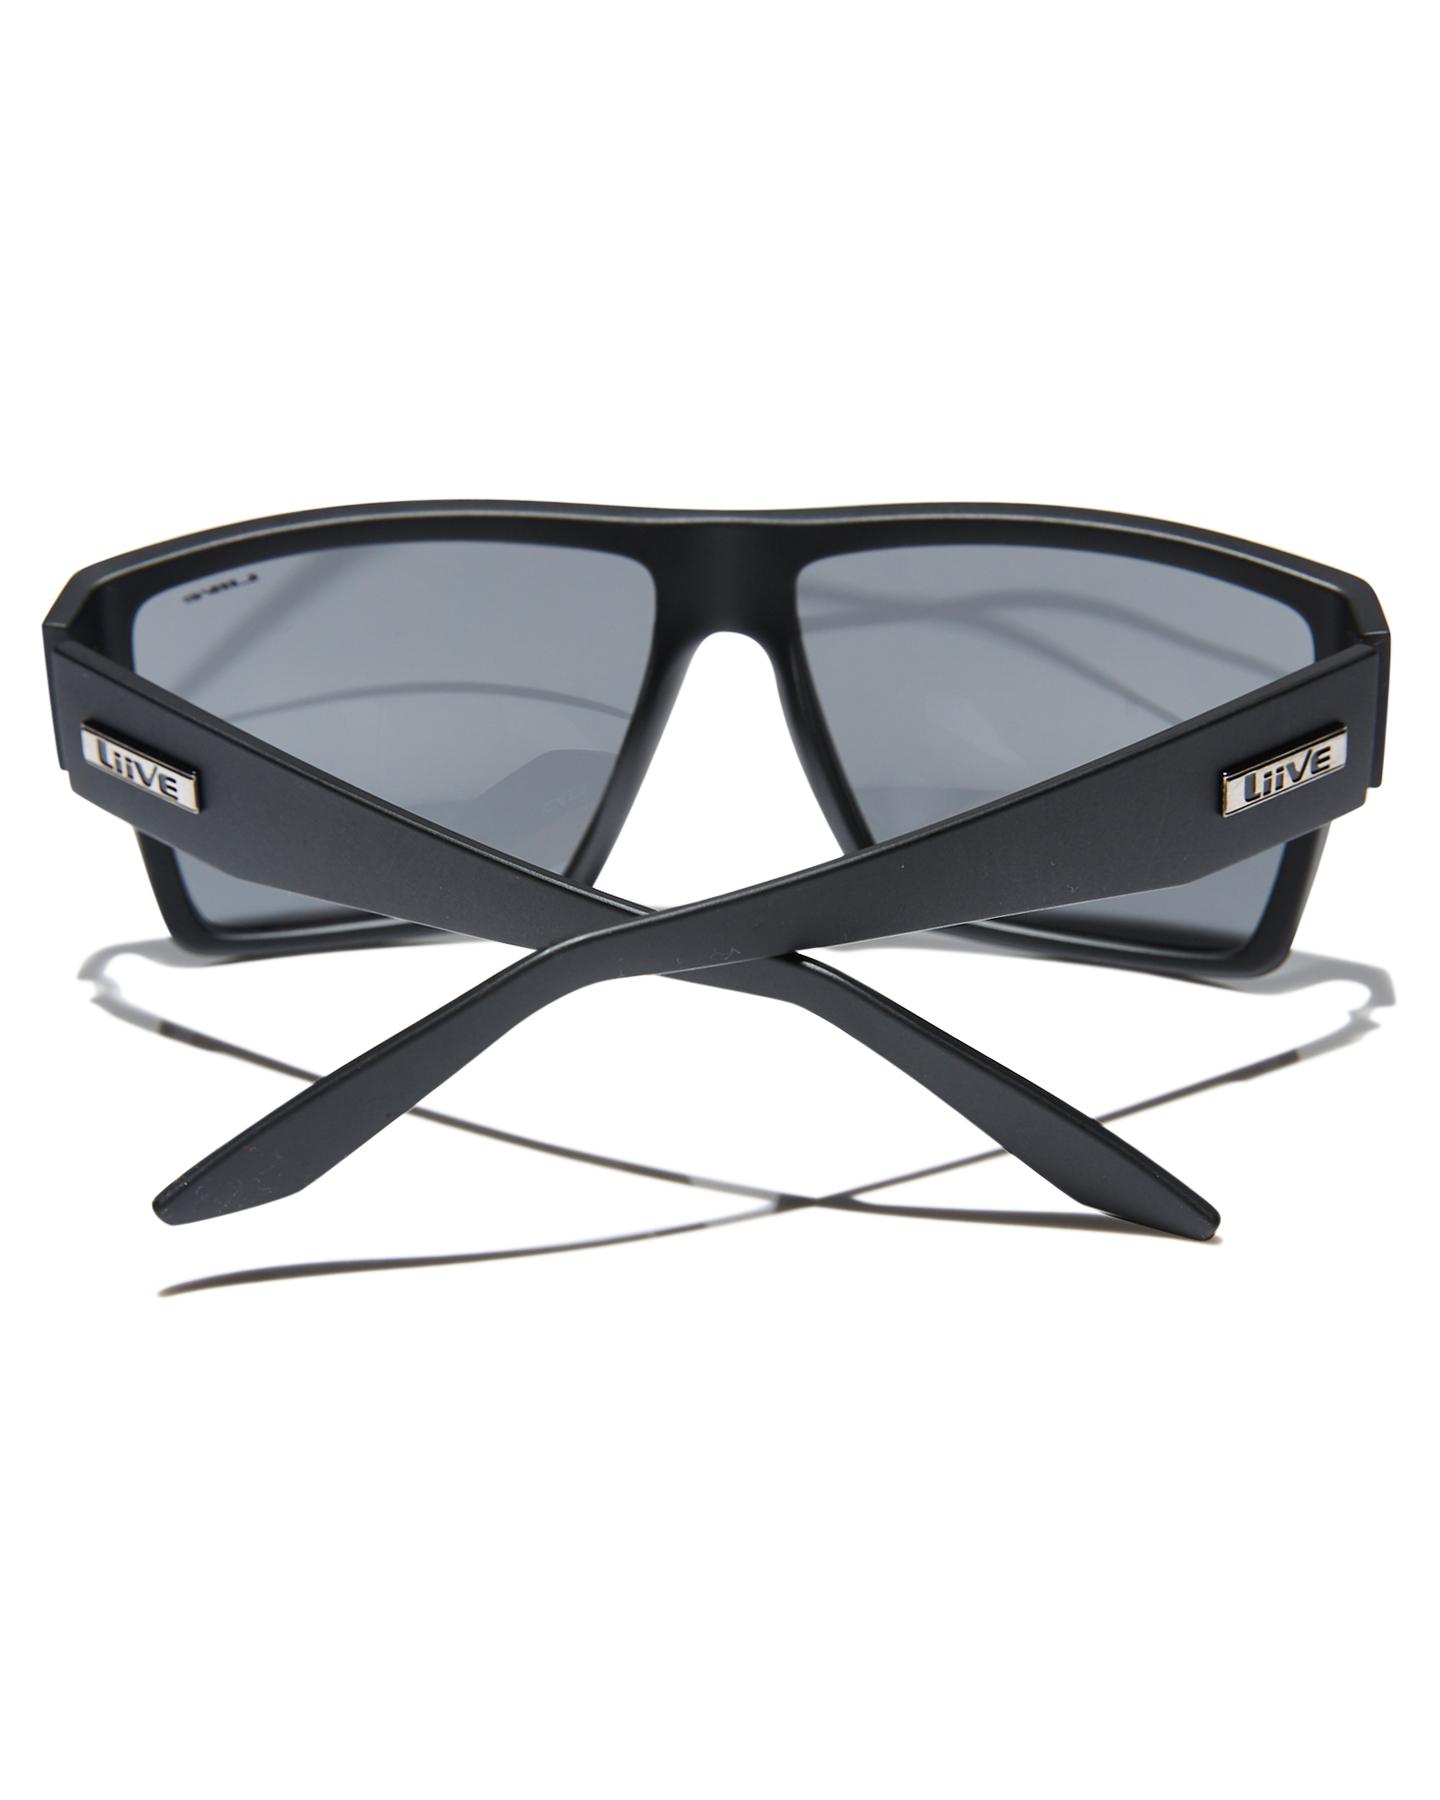 Liive Vision Volt Sunglasses - Matte Black | SurfStitch